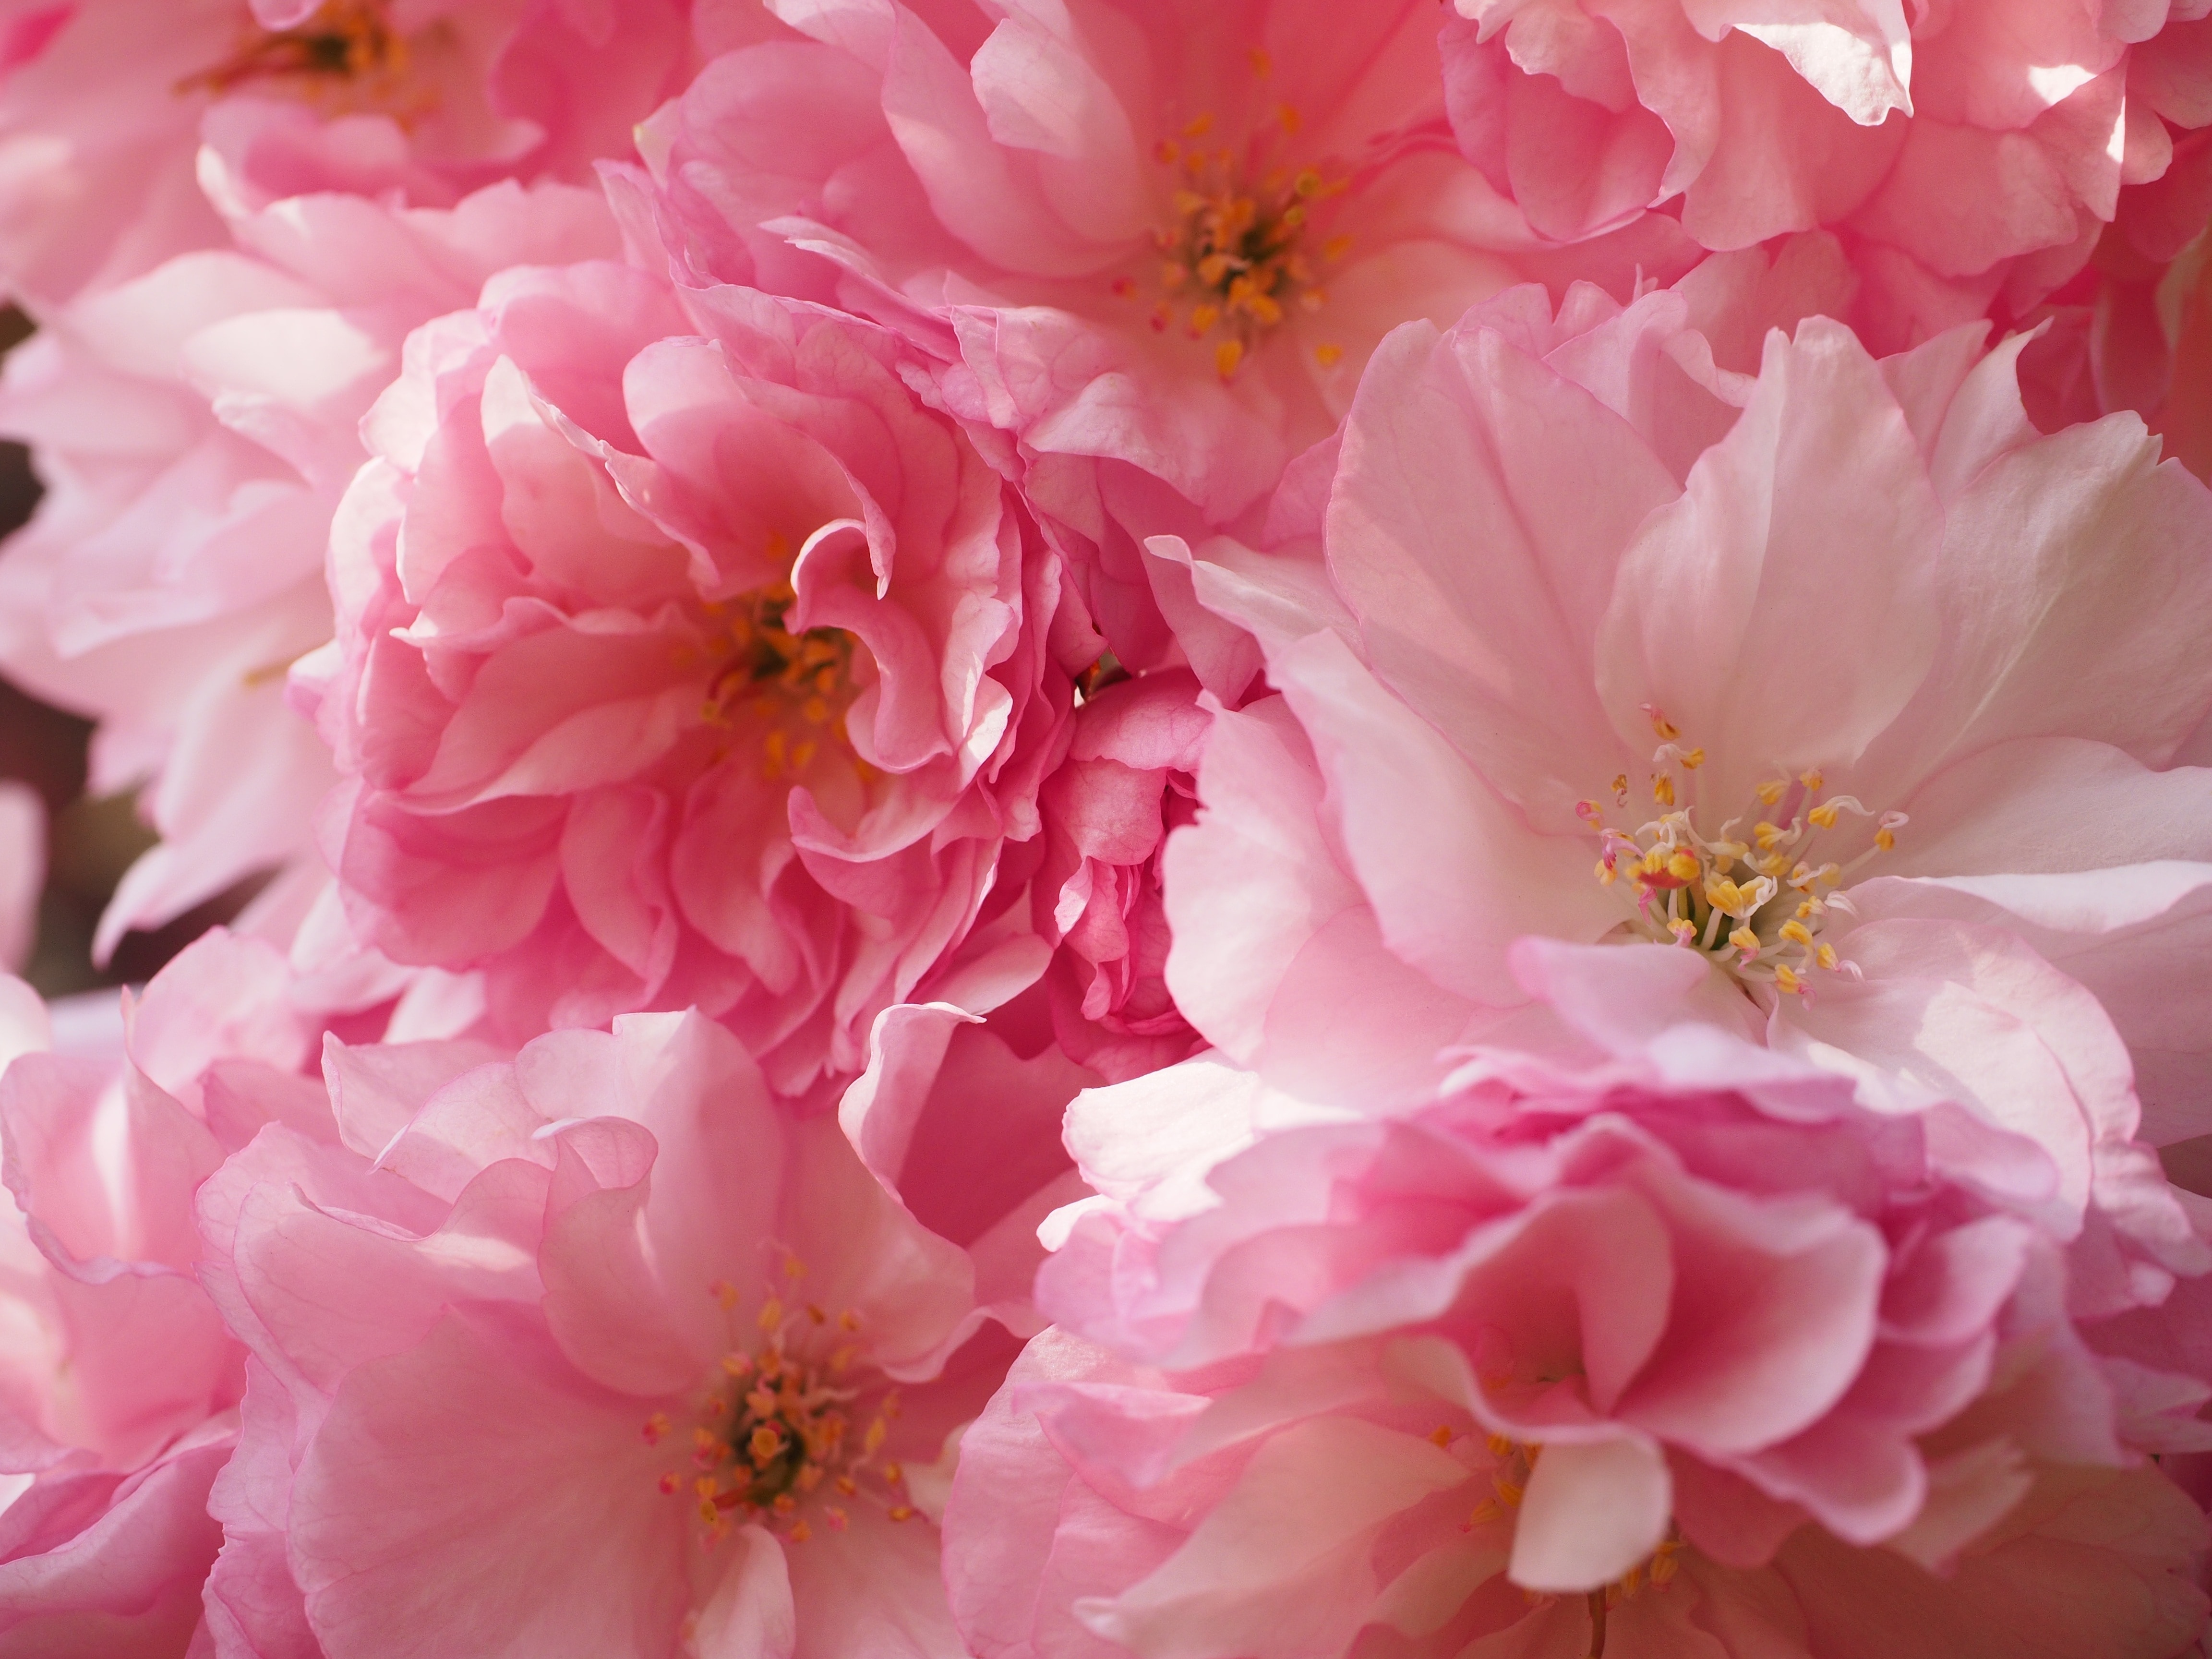 pink and white multipetaled flower